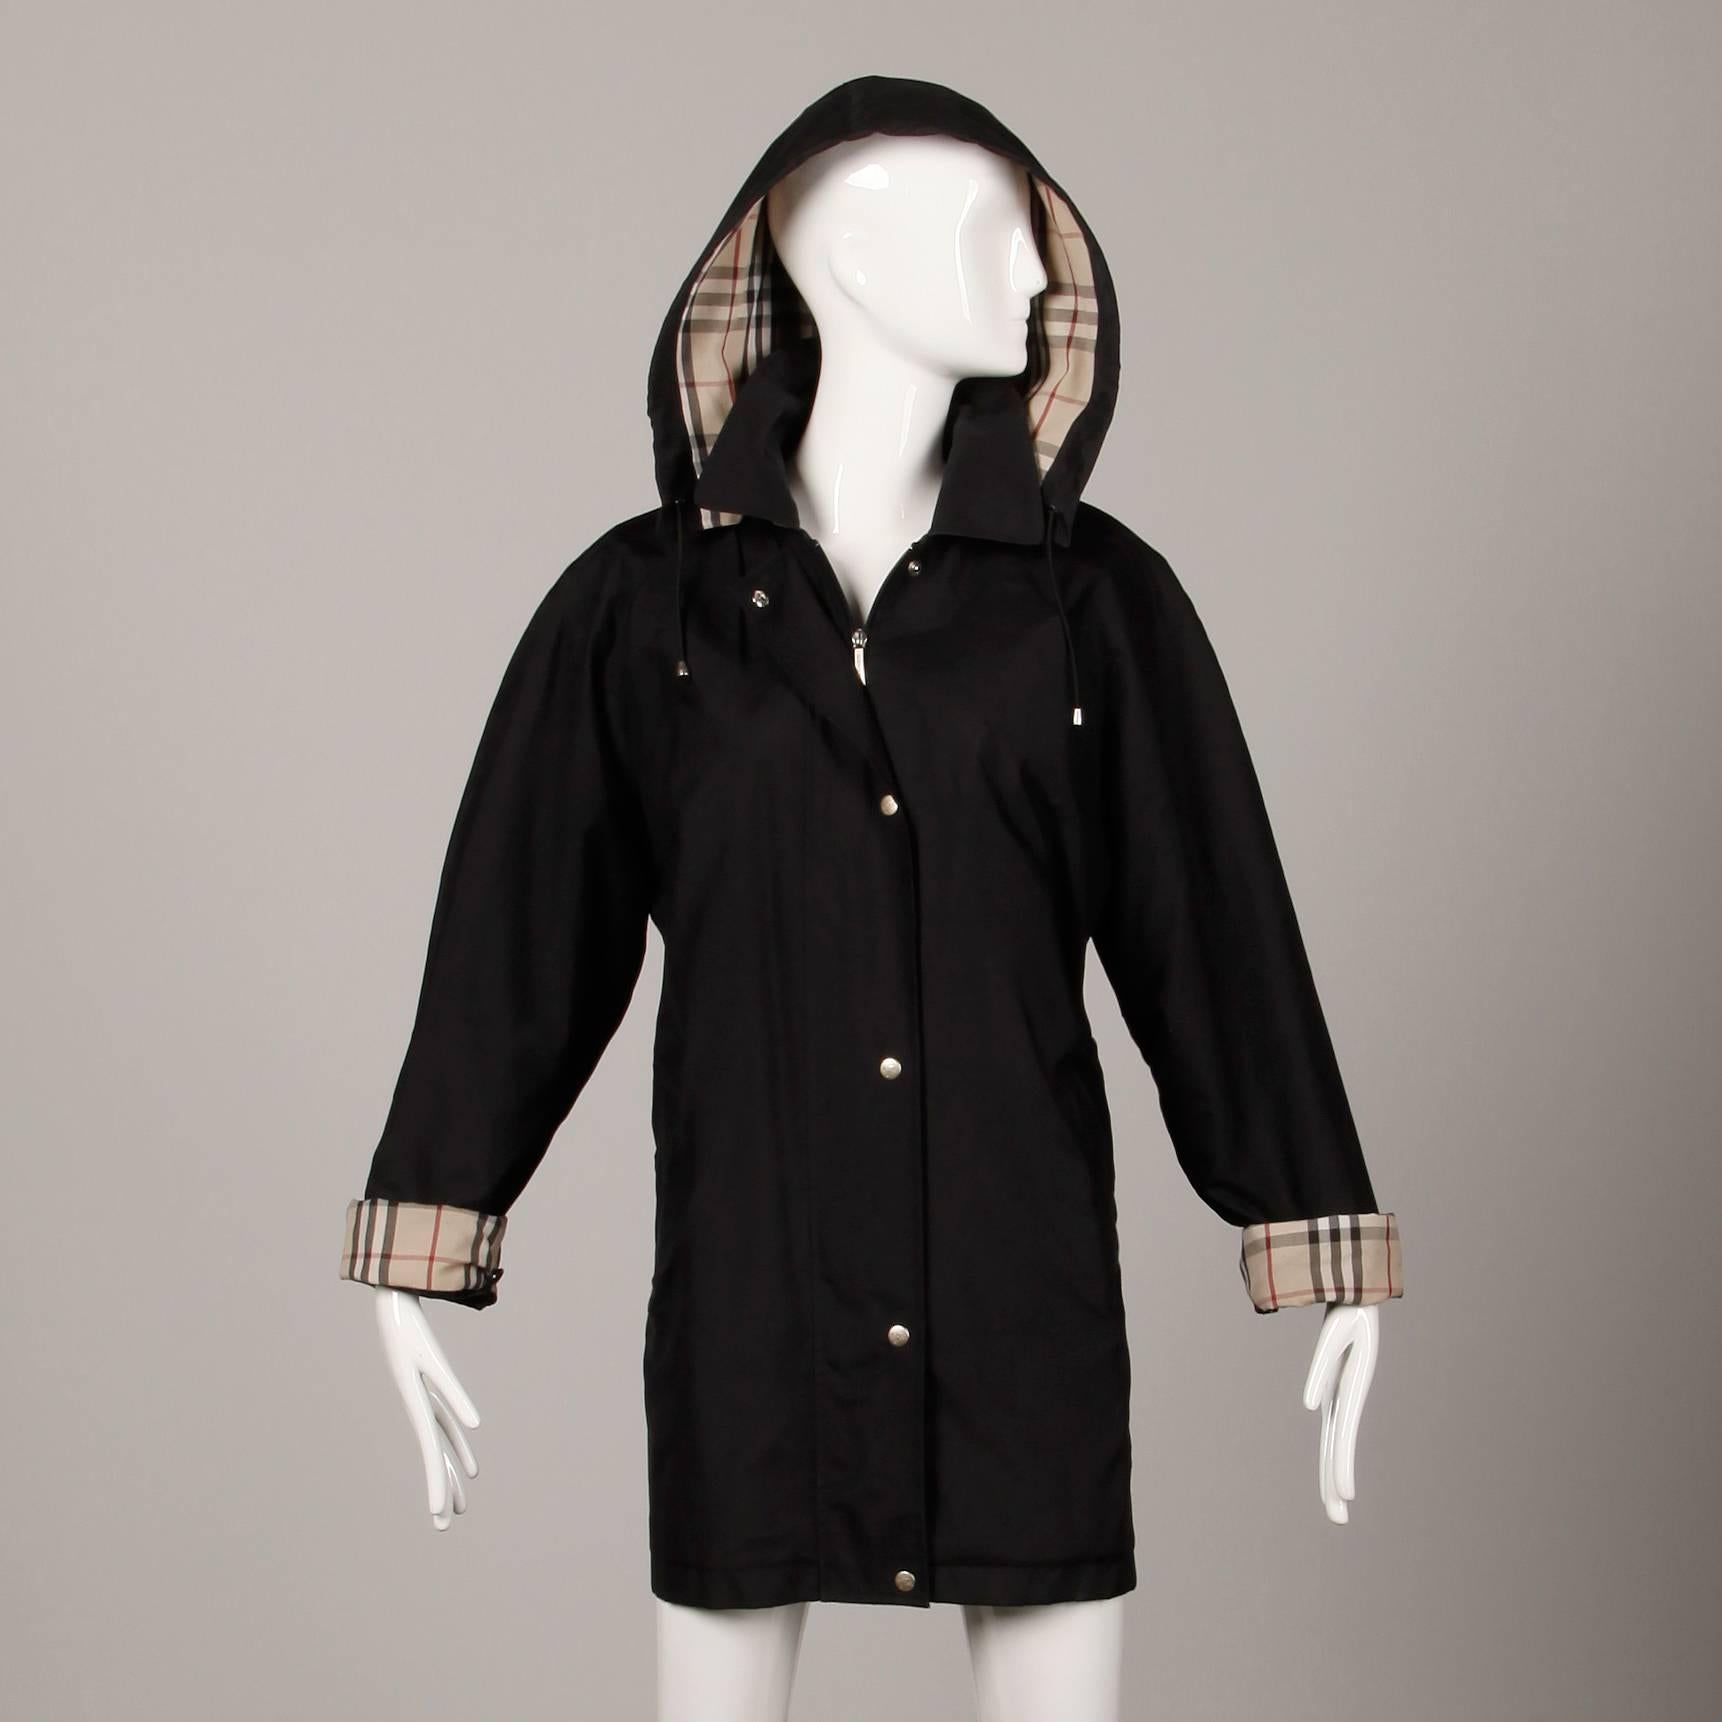 burberry raincoat with hood